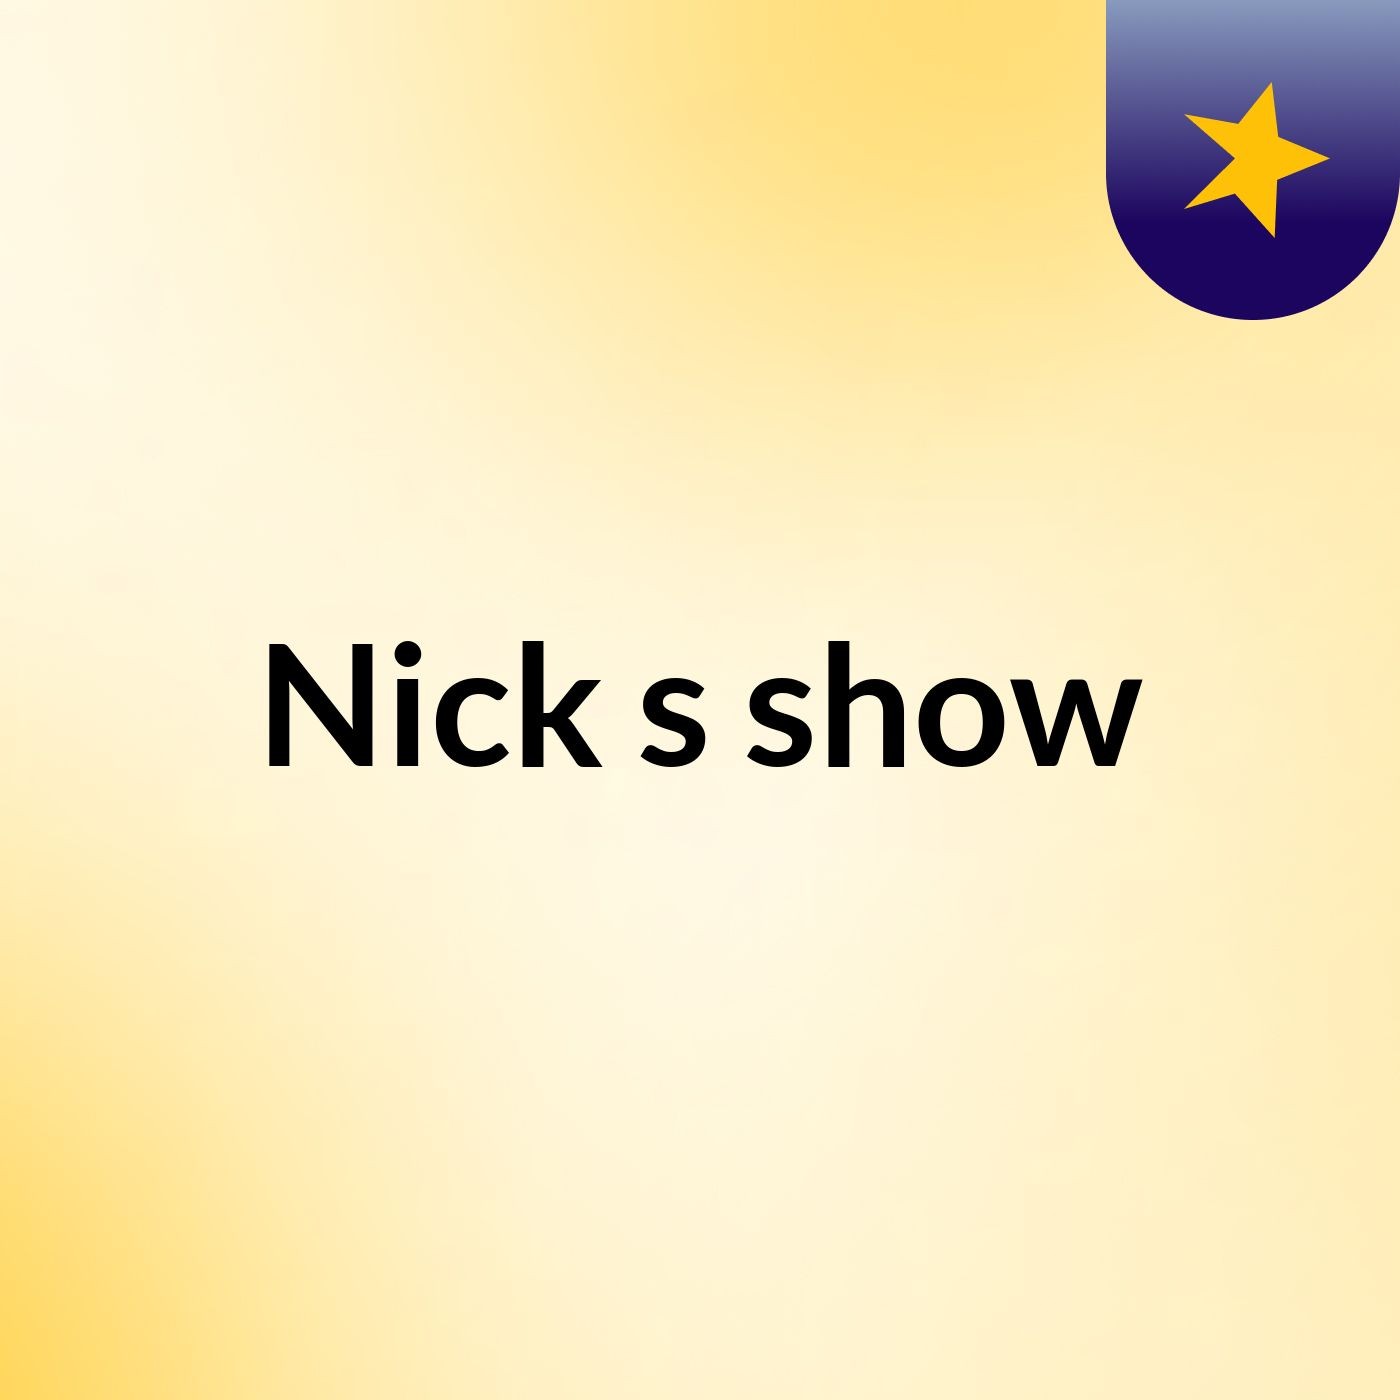 Nick's show